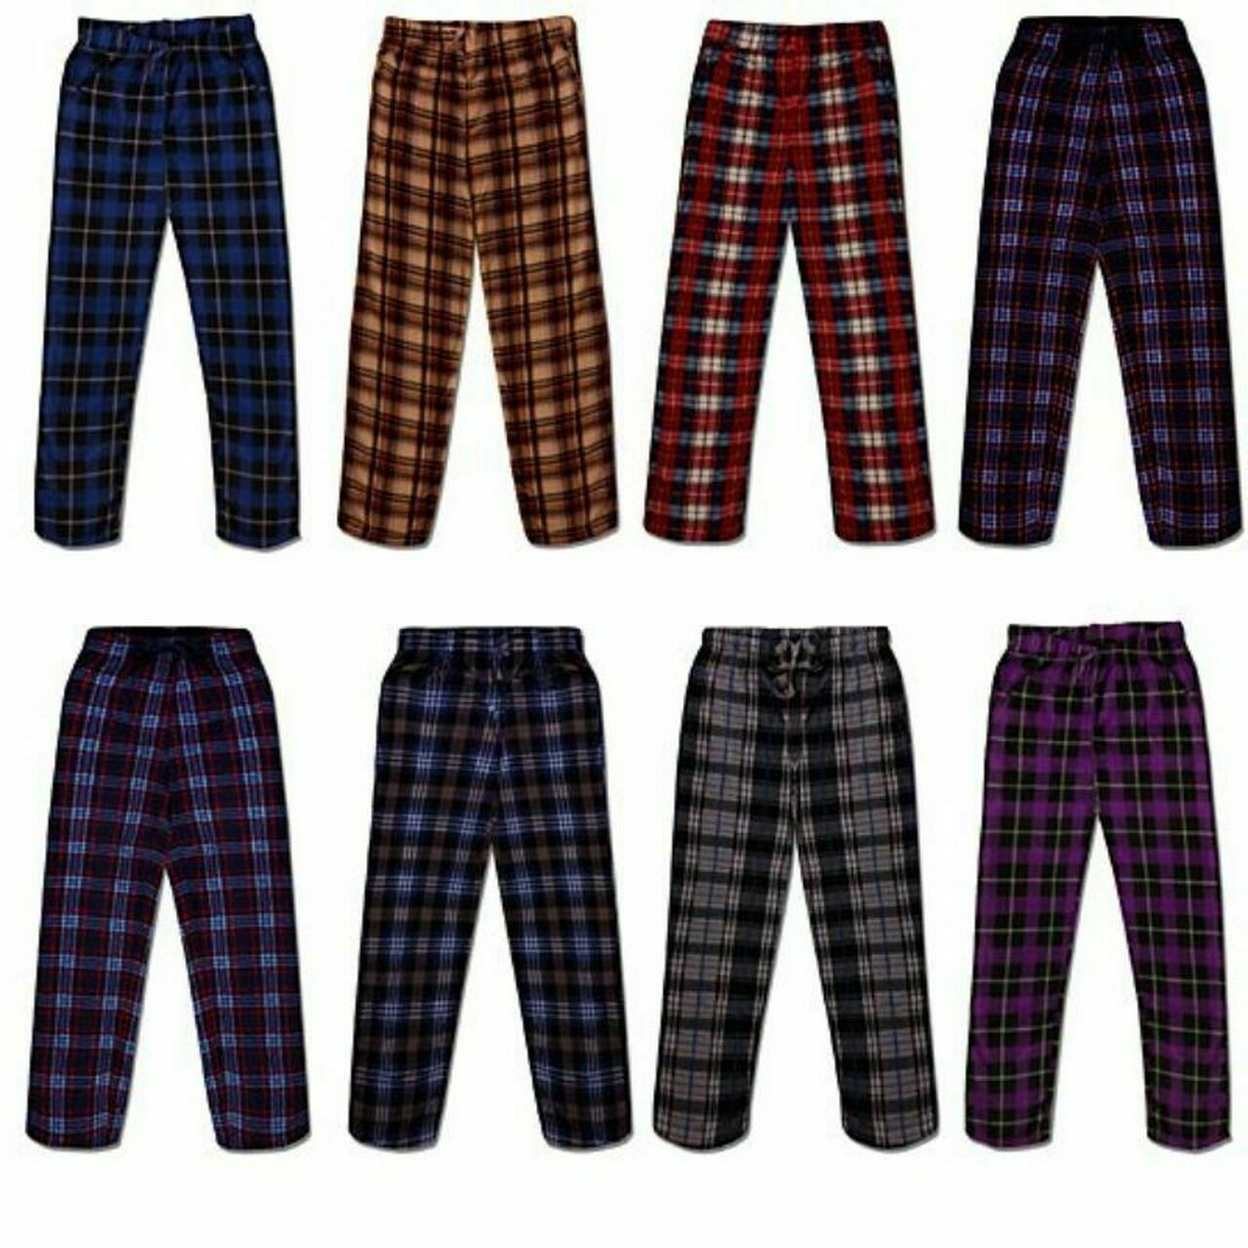 2-Pack: Men's Ultra Soft Cozy Flannel Fleece Plaid Pajama Sleep Bottom Lounge Pants - Black & Red, X-large